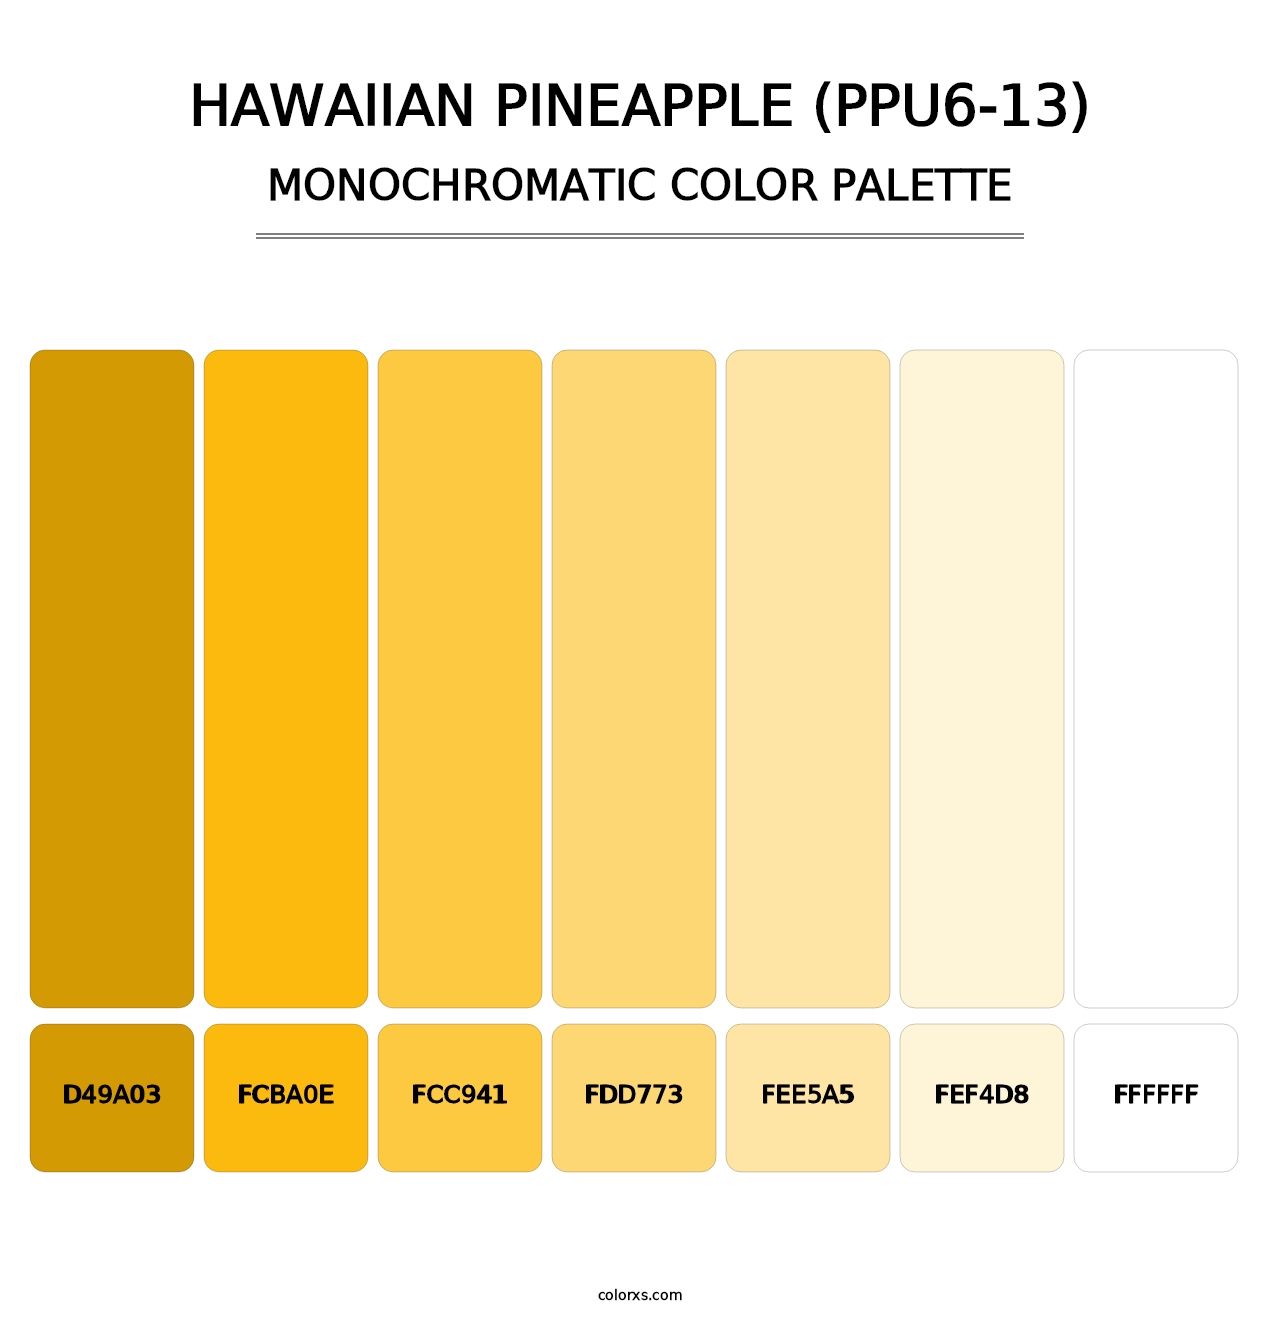 Hawaiian Pineapple (PPU6-13) - Monochromatic Color Palette